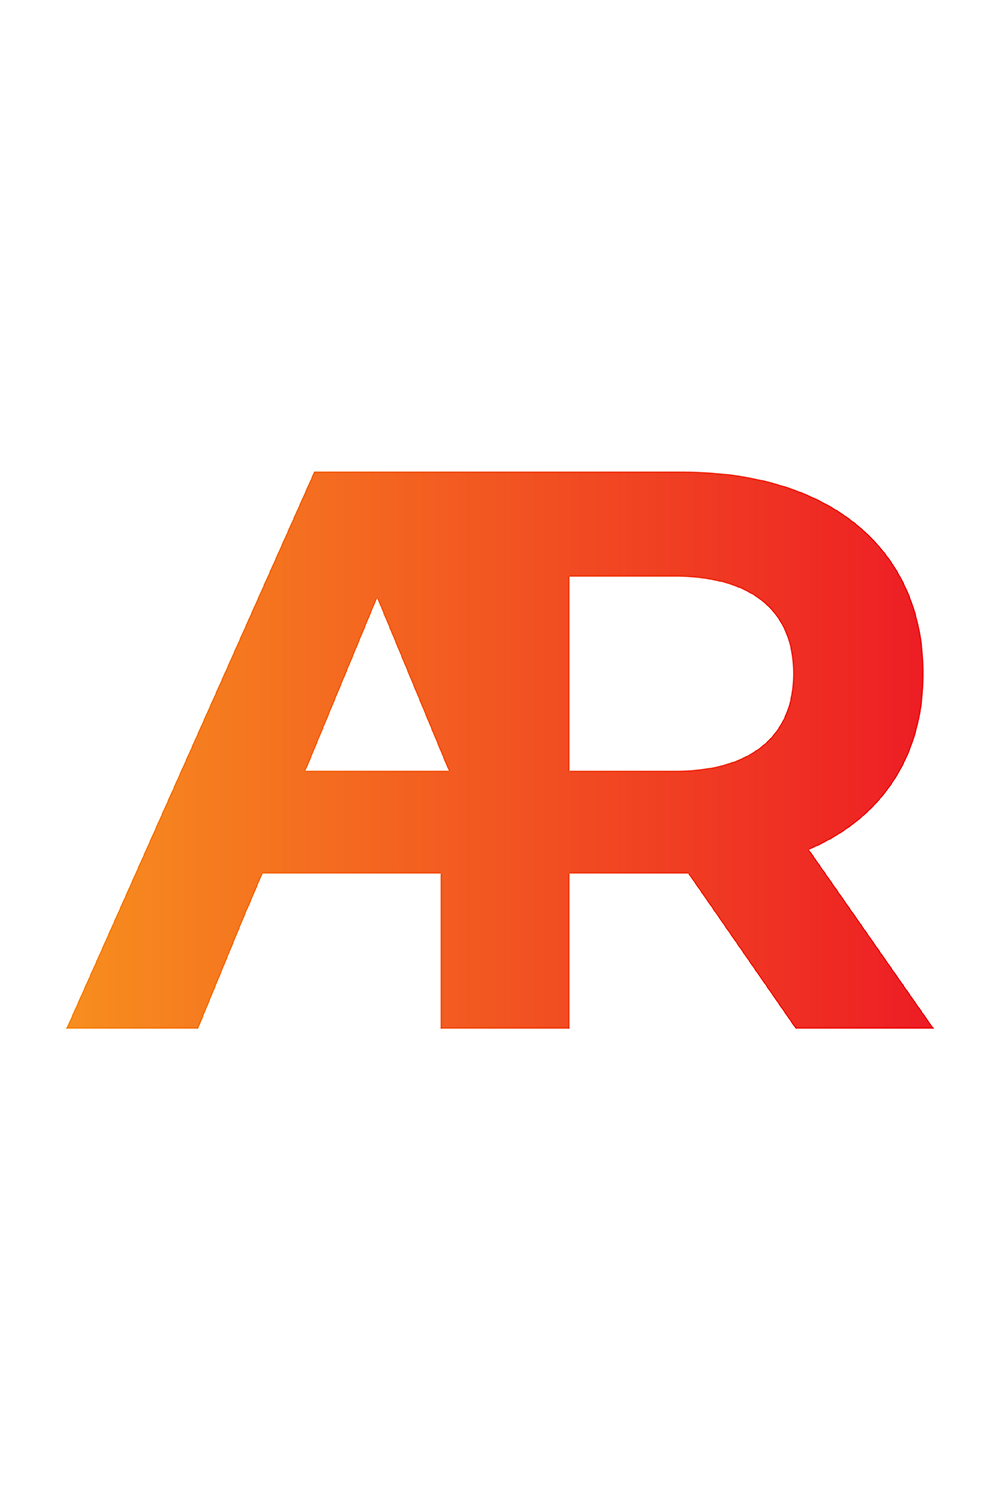 AR Letter Logo Vector pinterest preview image.